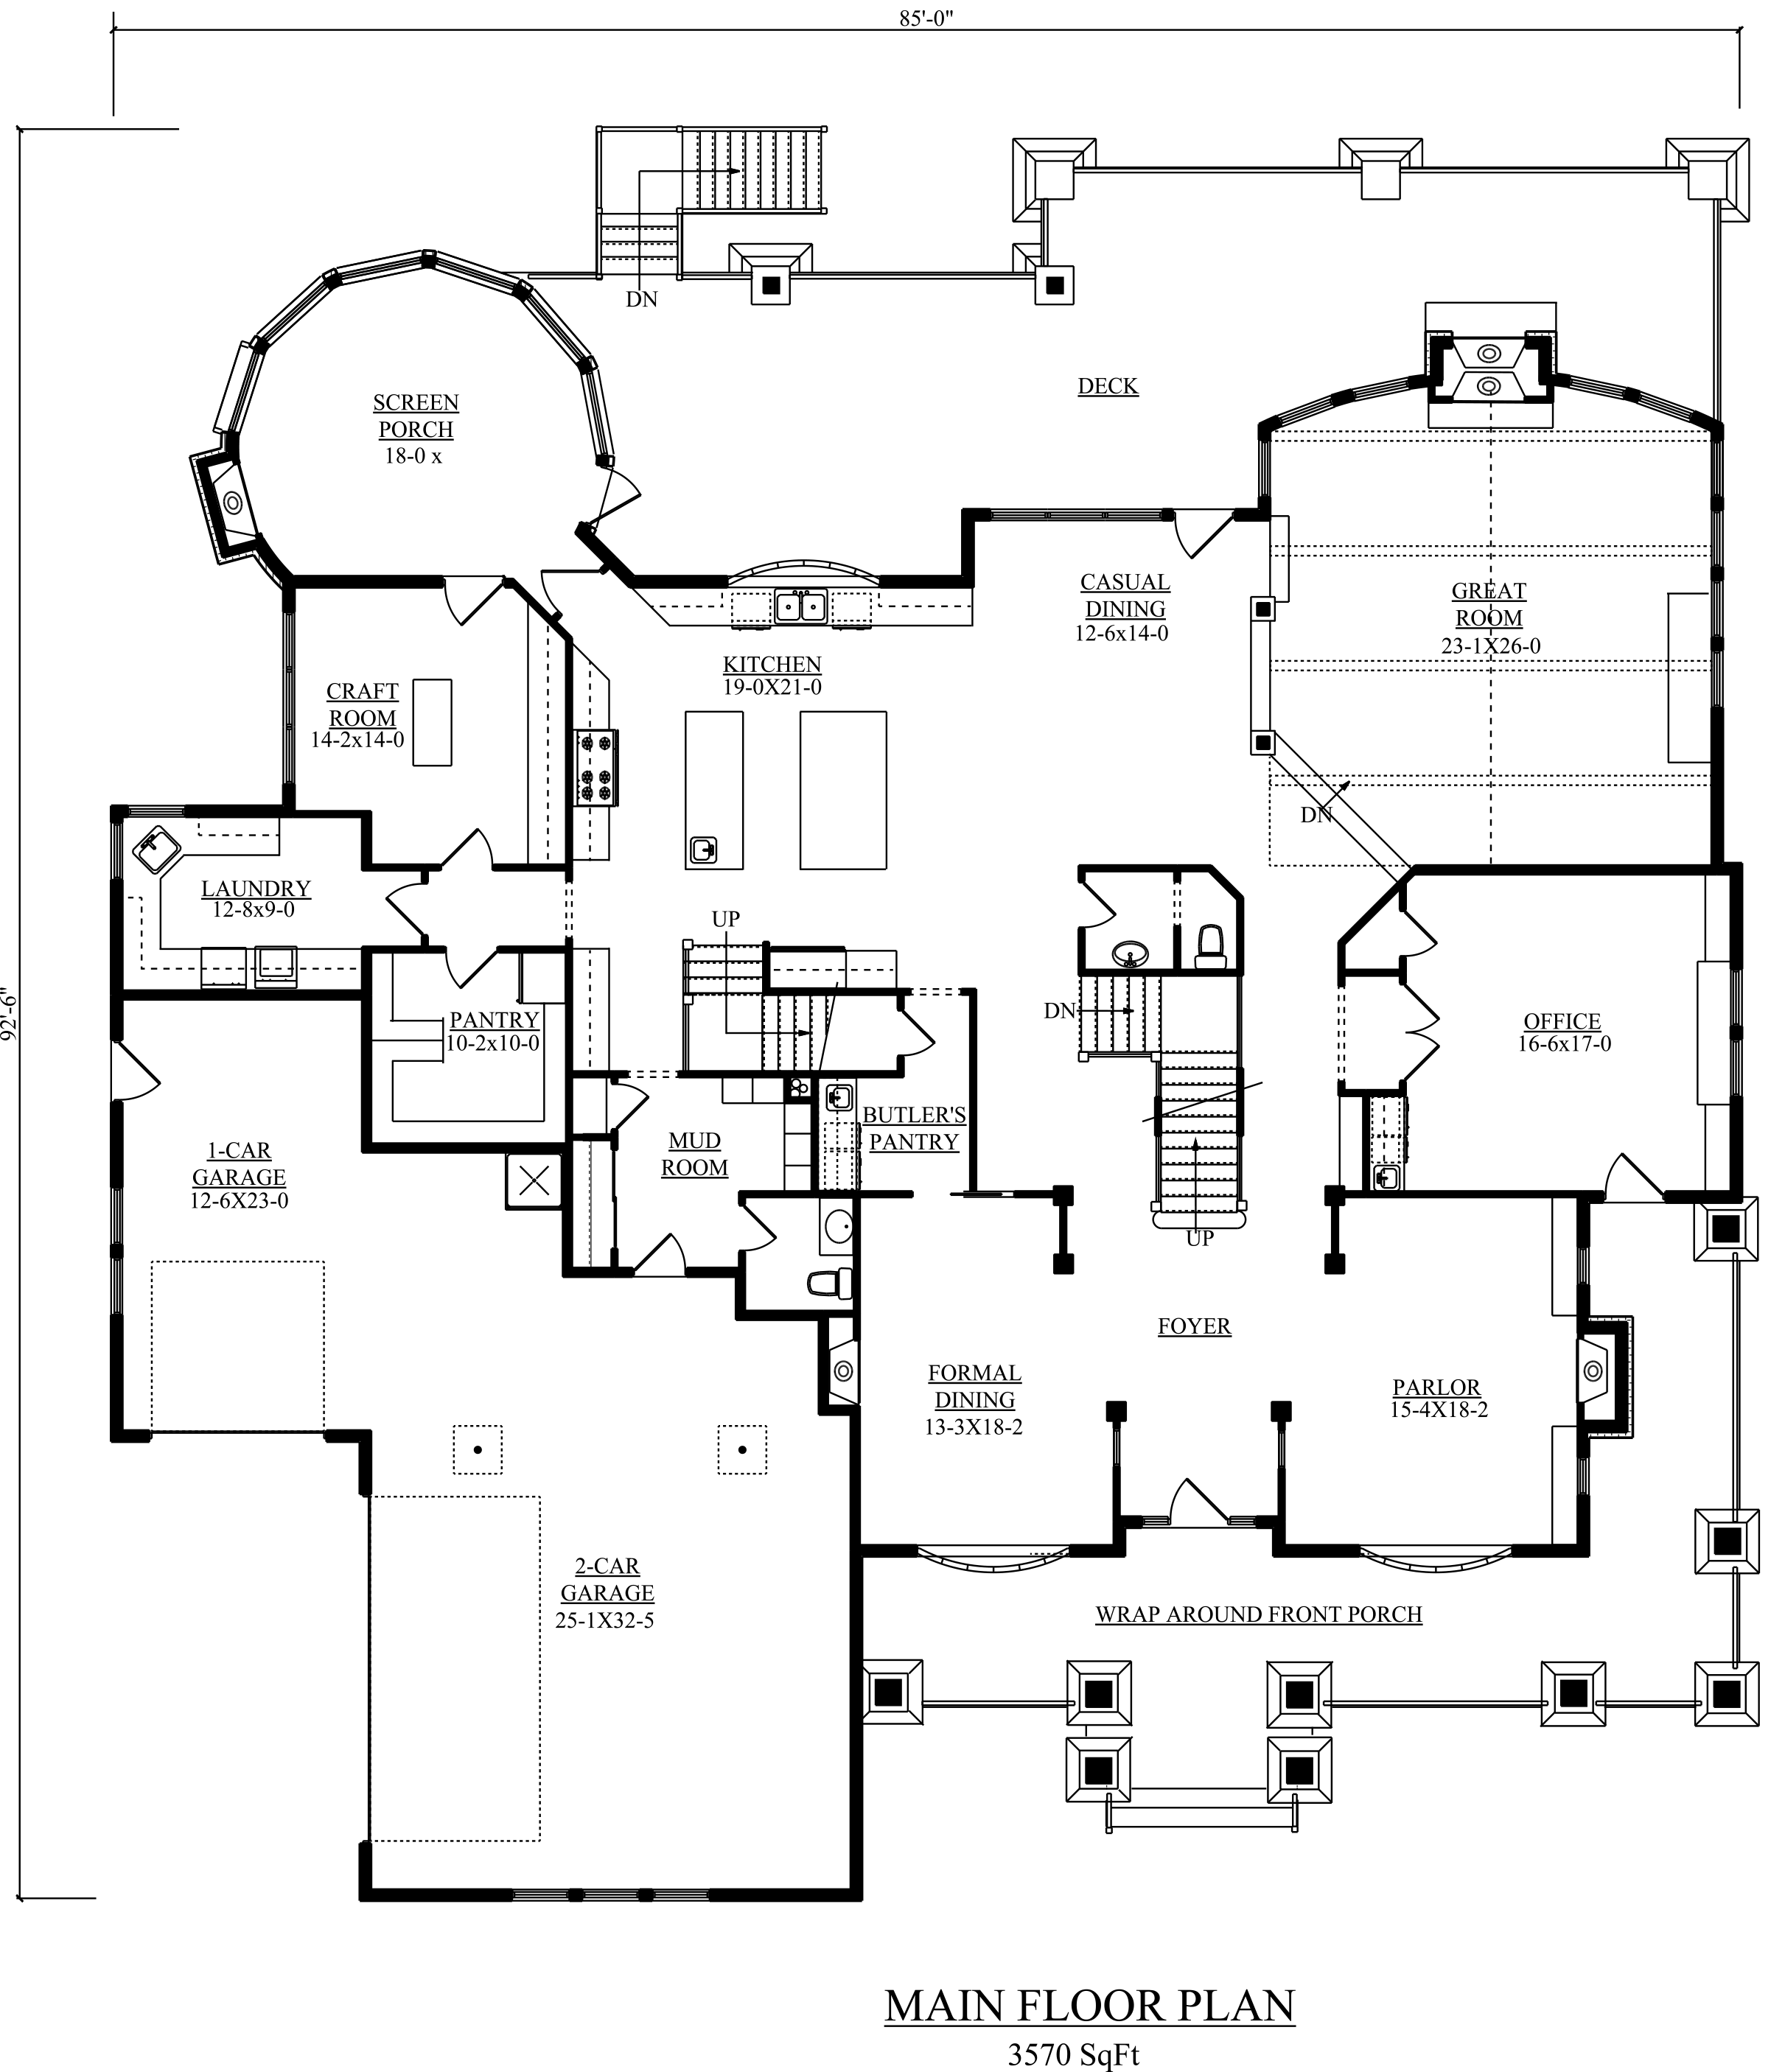 p1-the-new-haven-main-floor-r-c